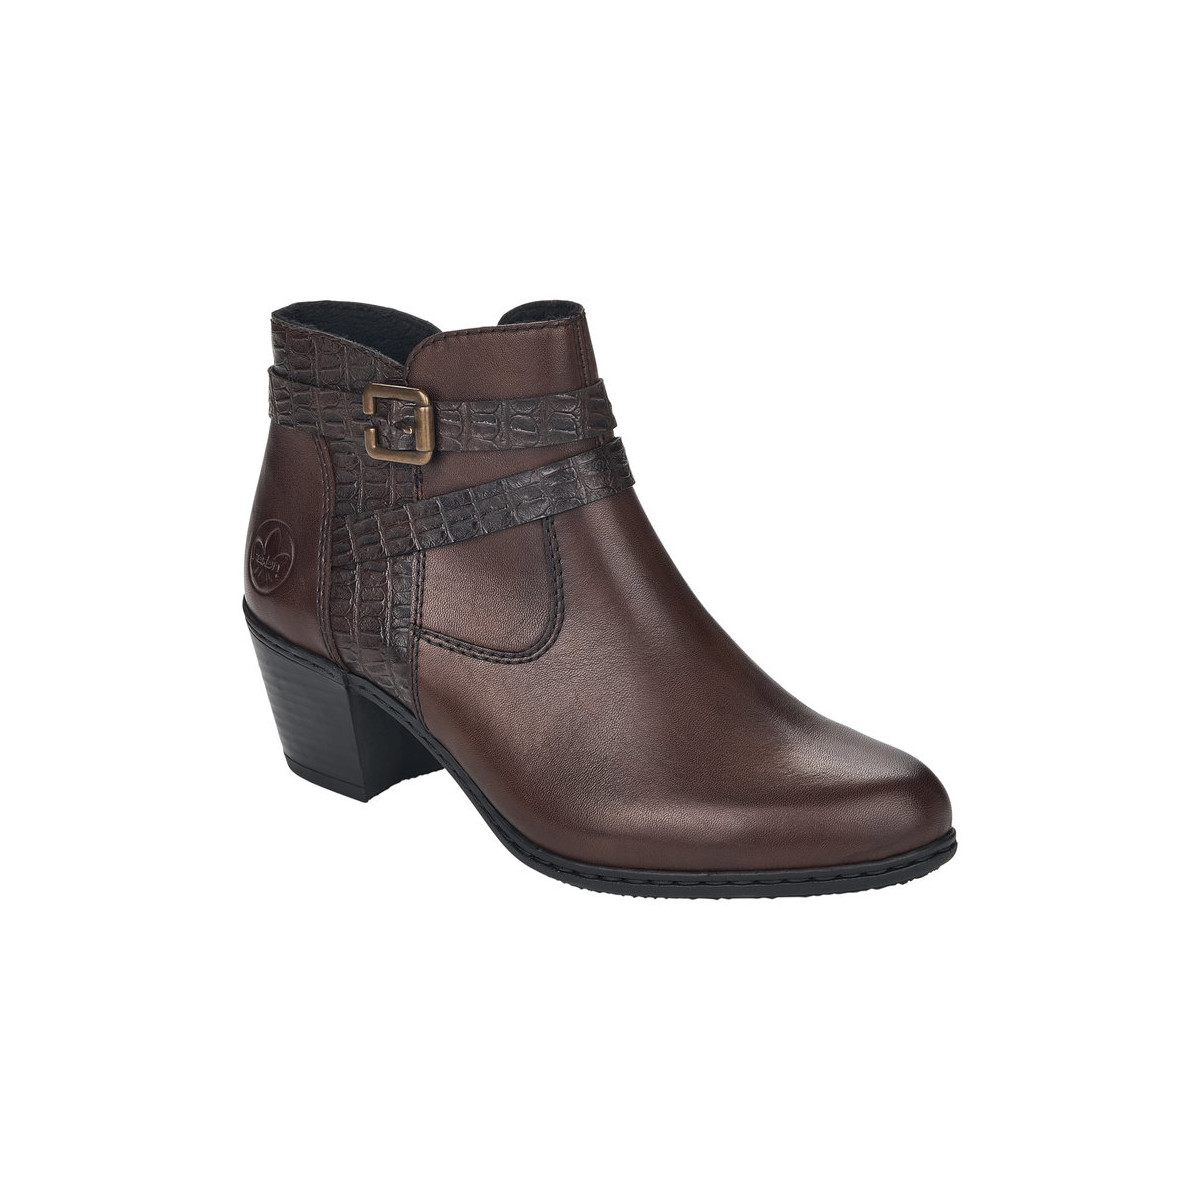 Chaussures Femme Low boots Rieker Y2174-25 NOUGAT